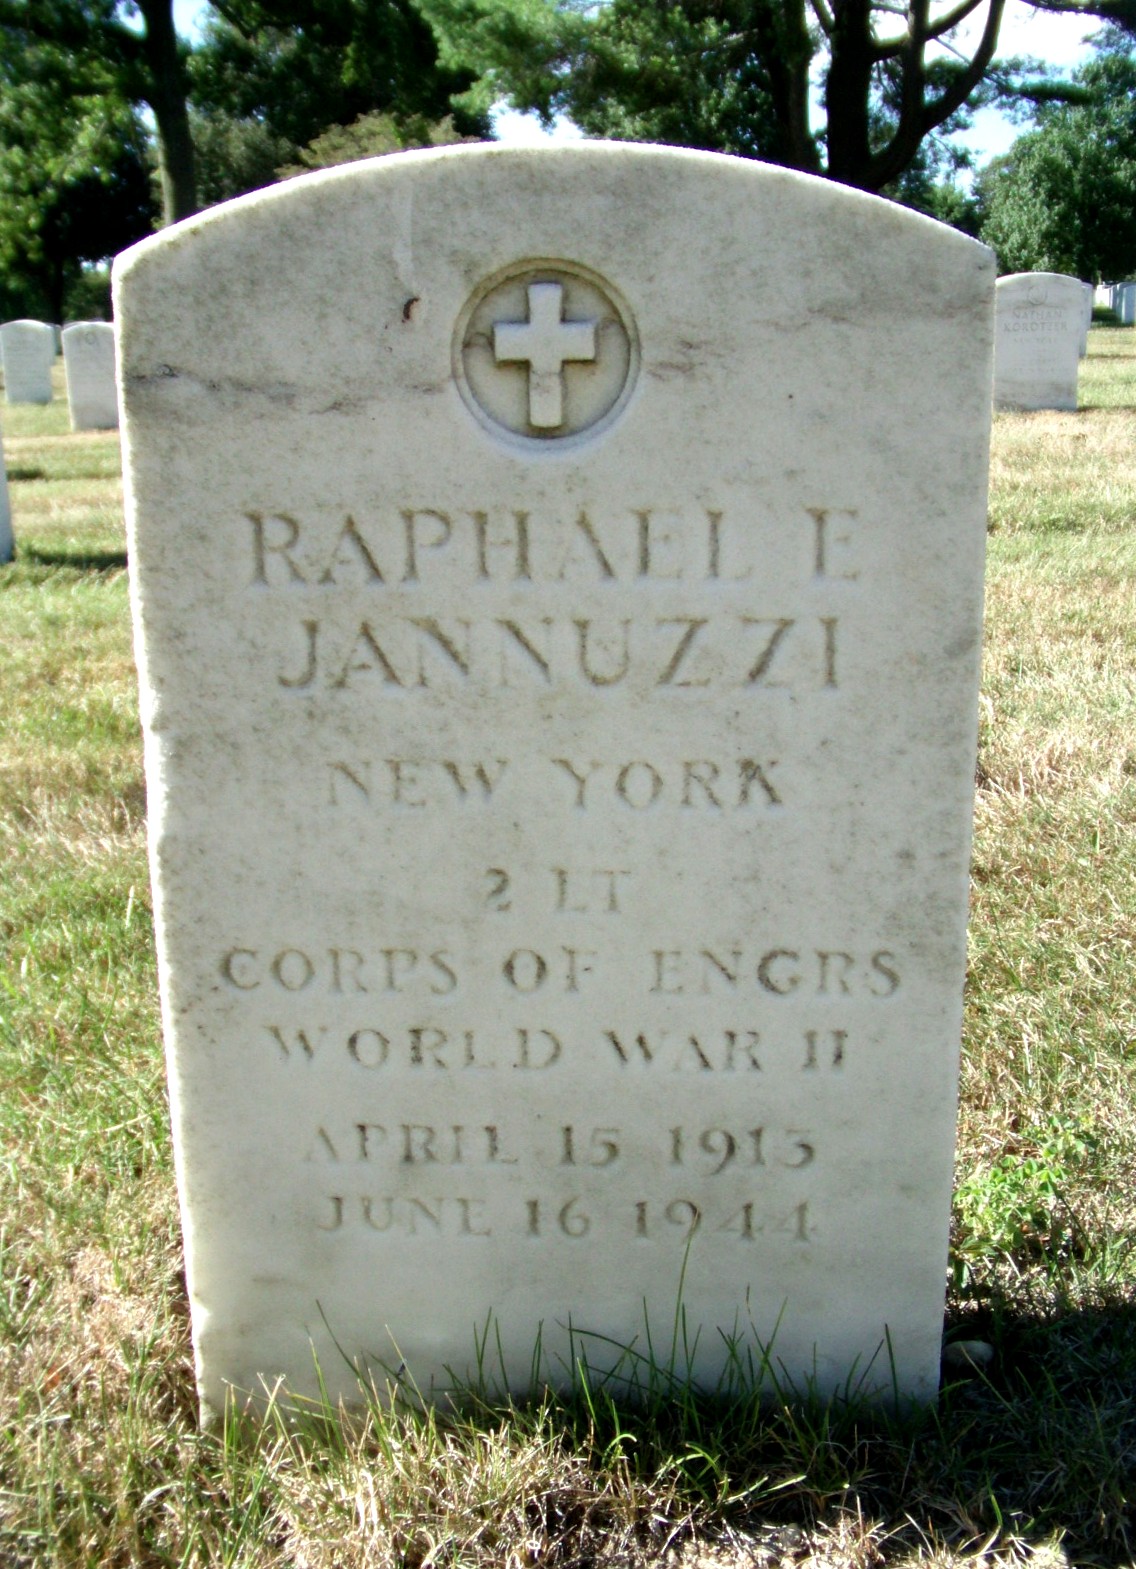 Headstone Jannuzzi